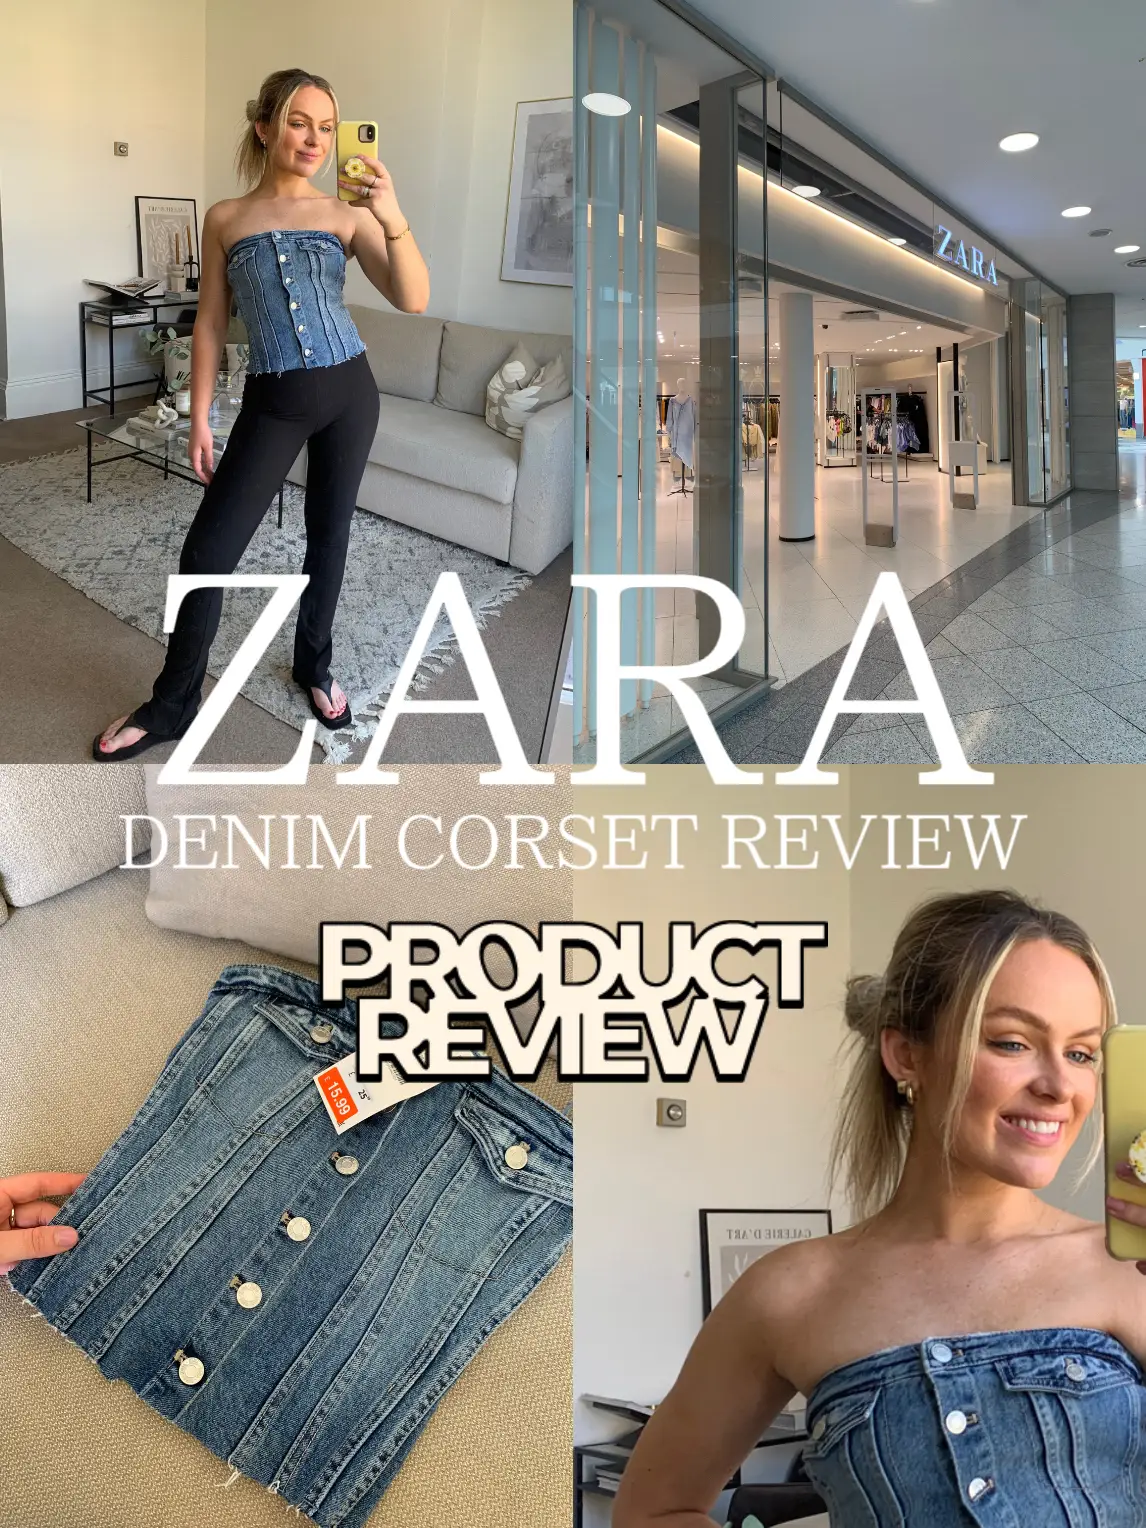 Zara - cool baggy jeans - sage denim - sz 2